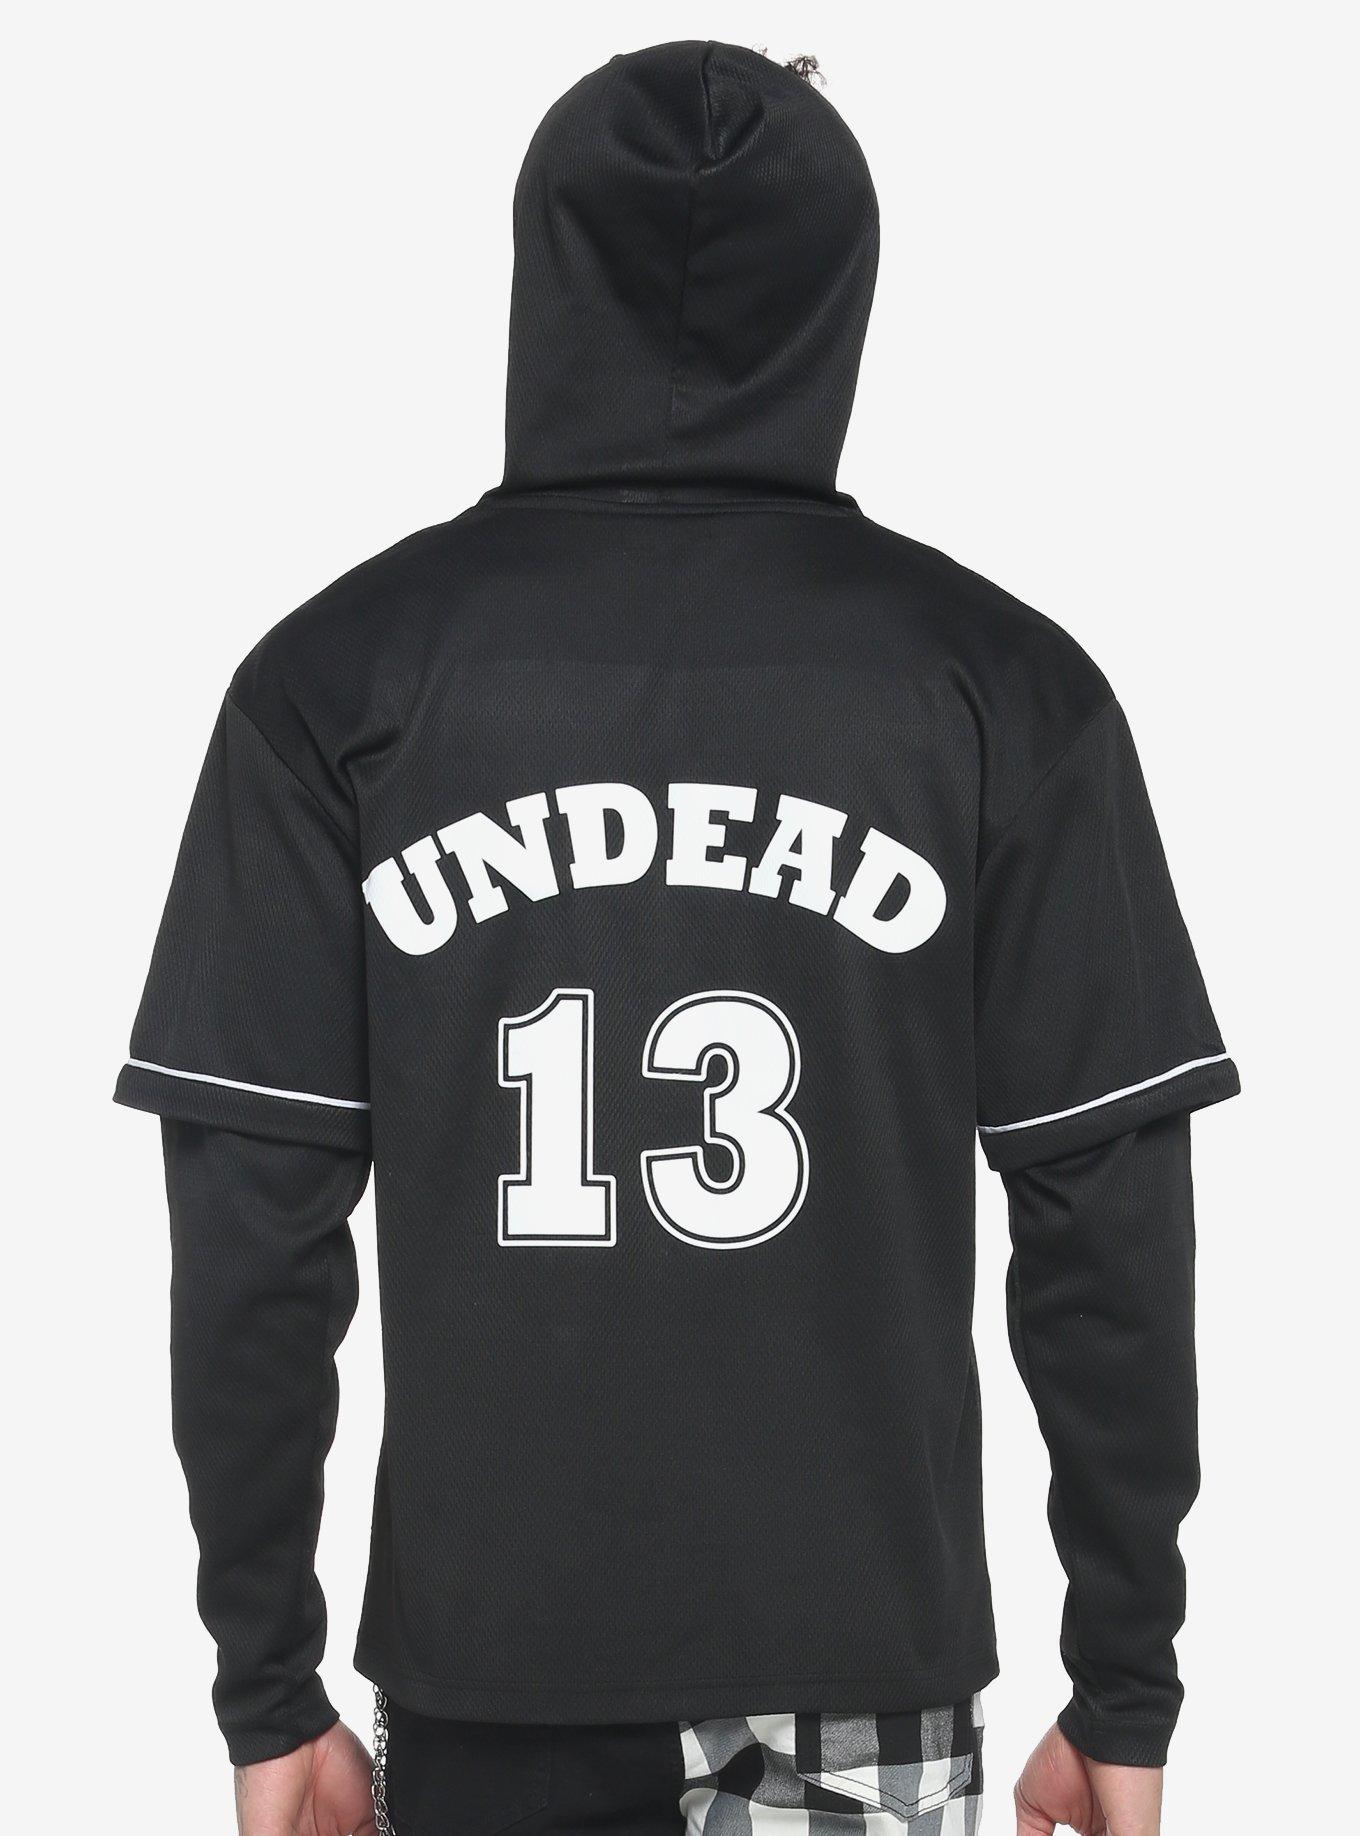 hoodie under baseball jersey